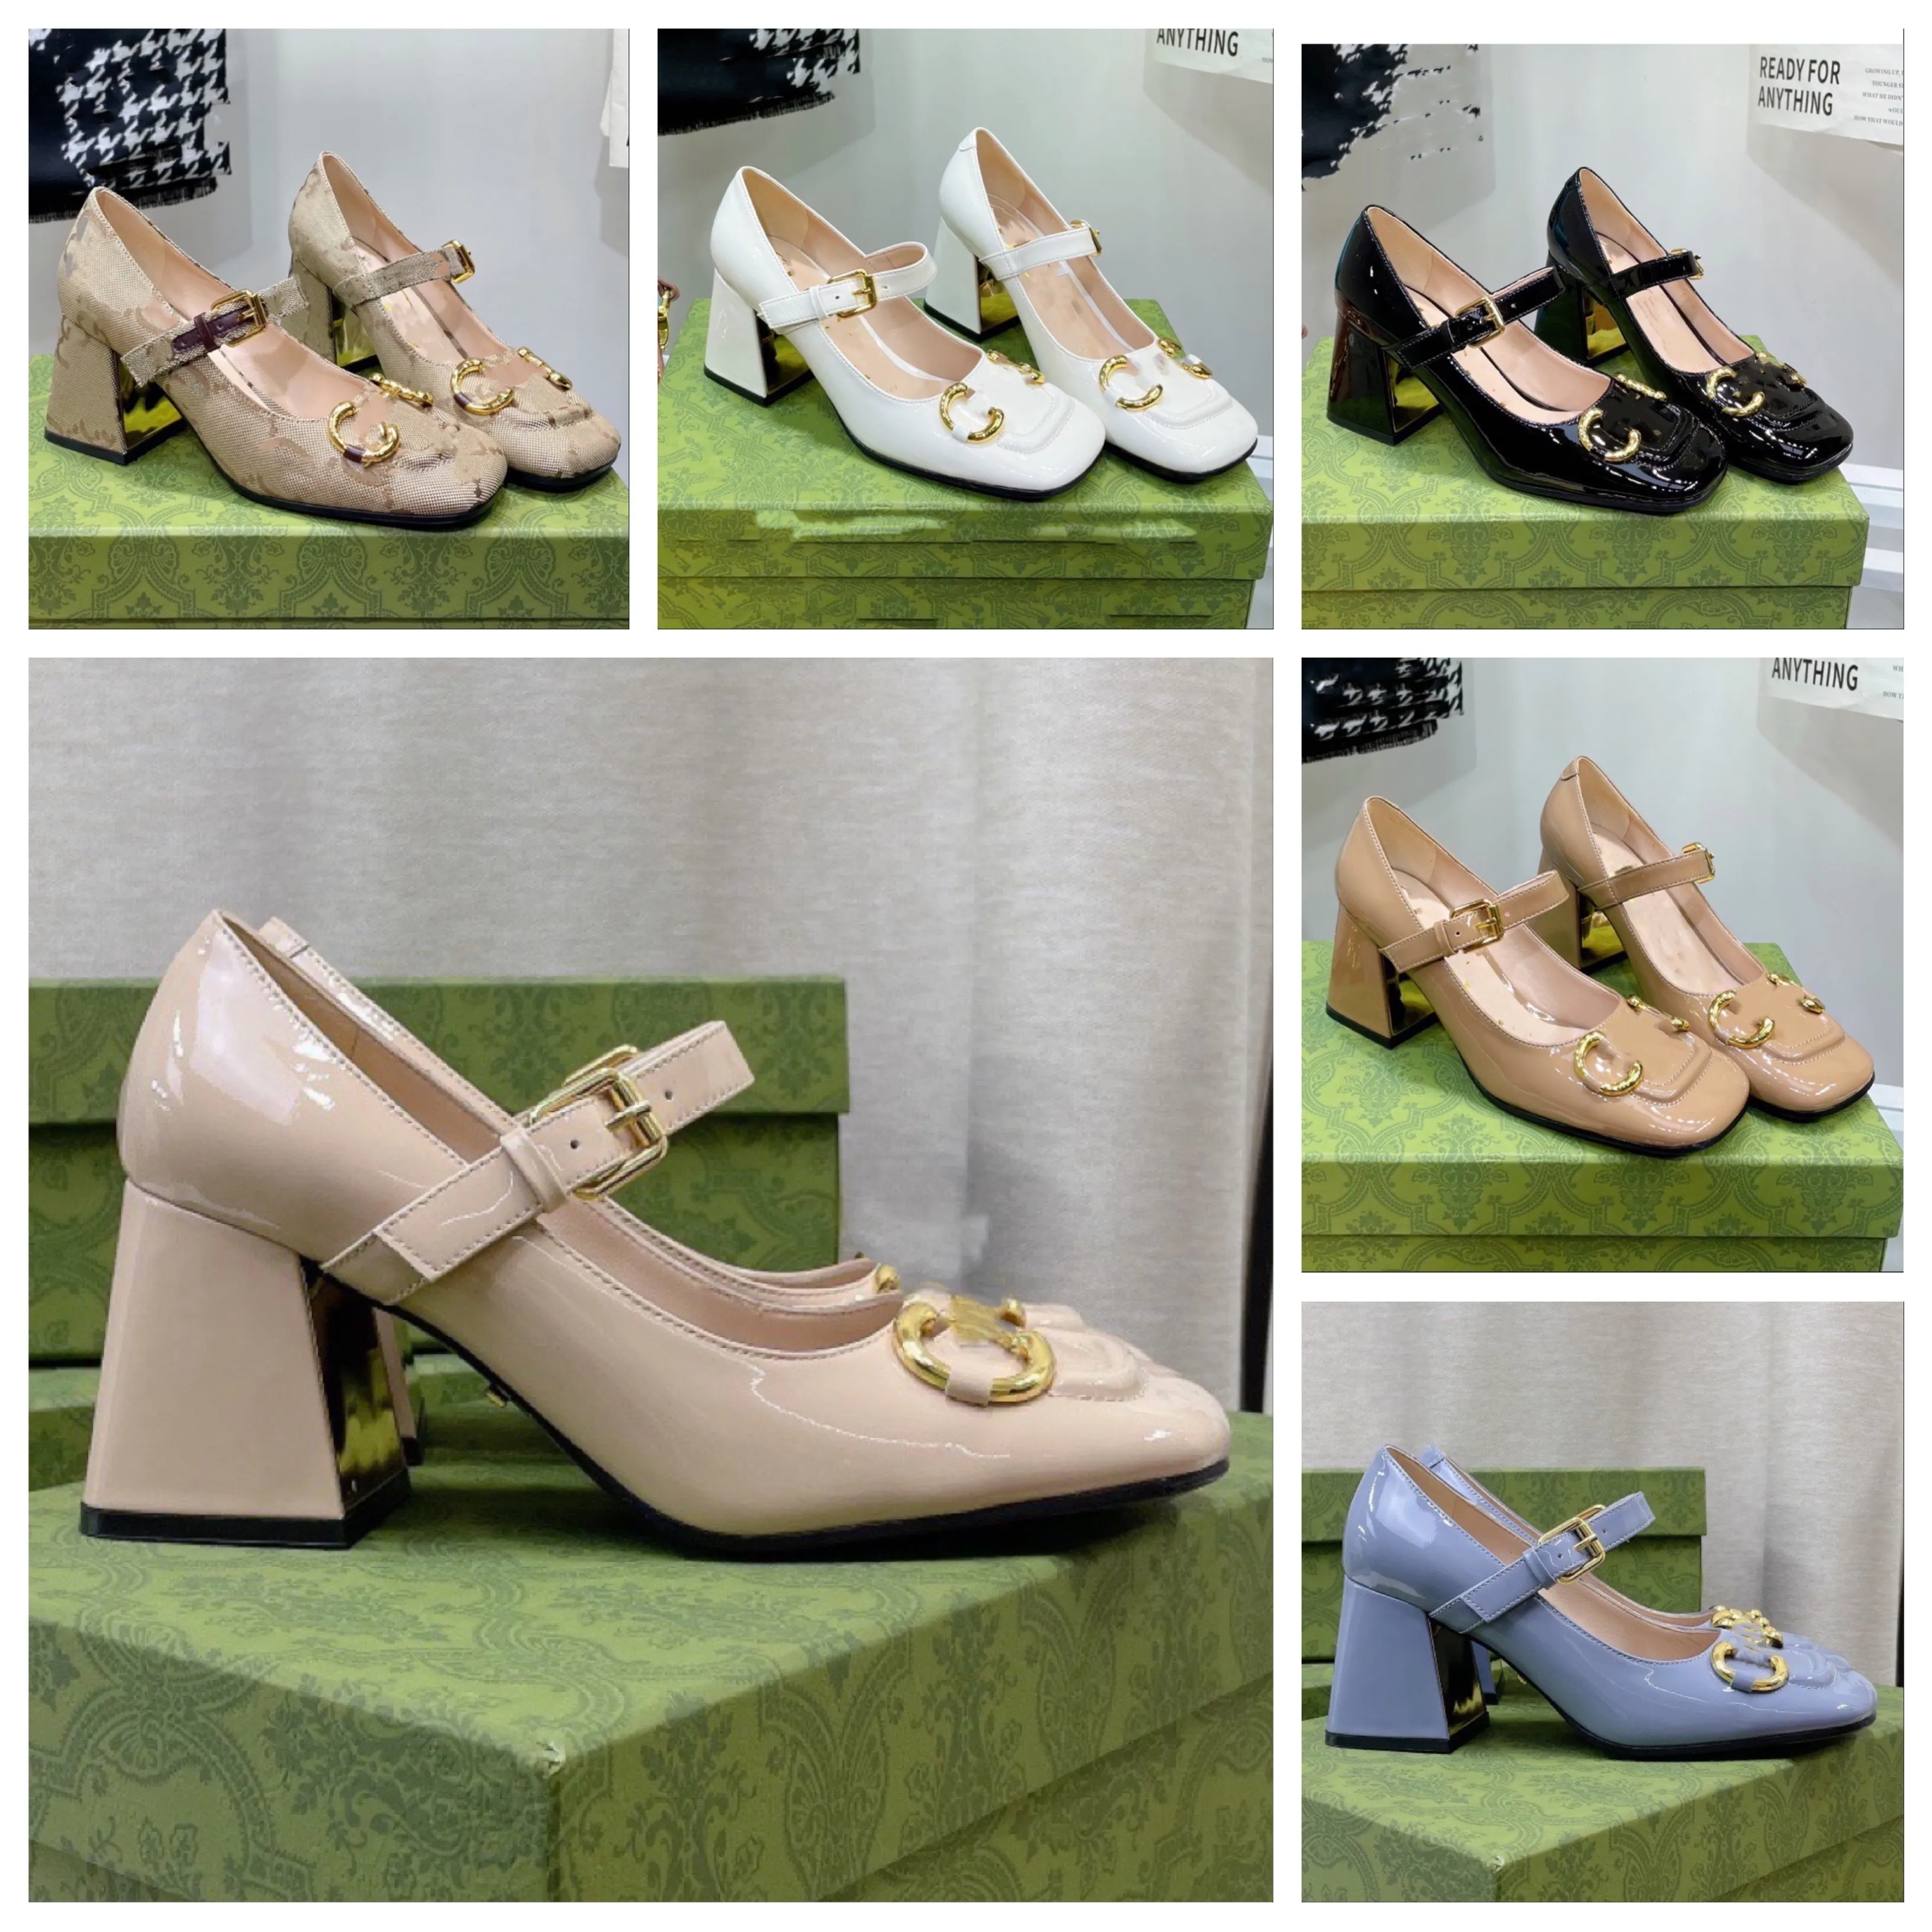 Designer Sandals Premium Quality mid-Block heel Pumps Horse-bit Deluxe Genuine Leather Ankle Buckle closure Sandals for Women Luxury Fashion Size 35-40